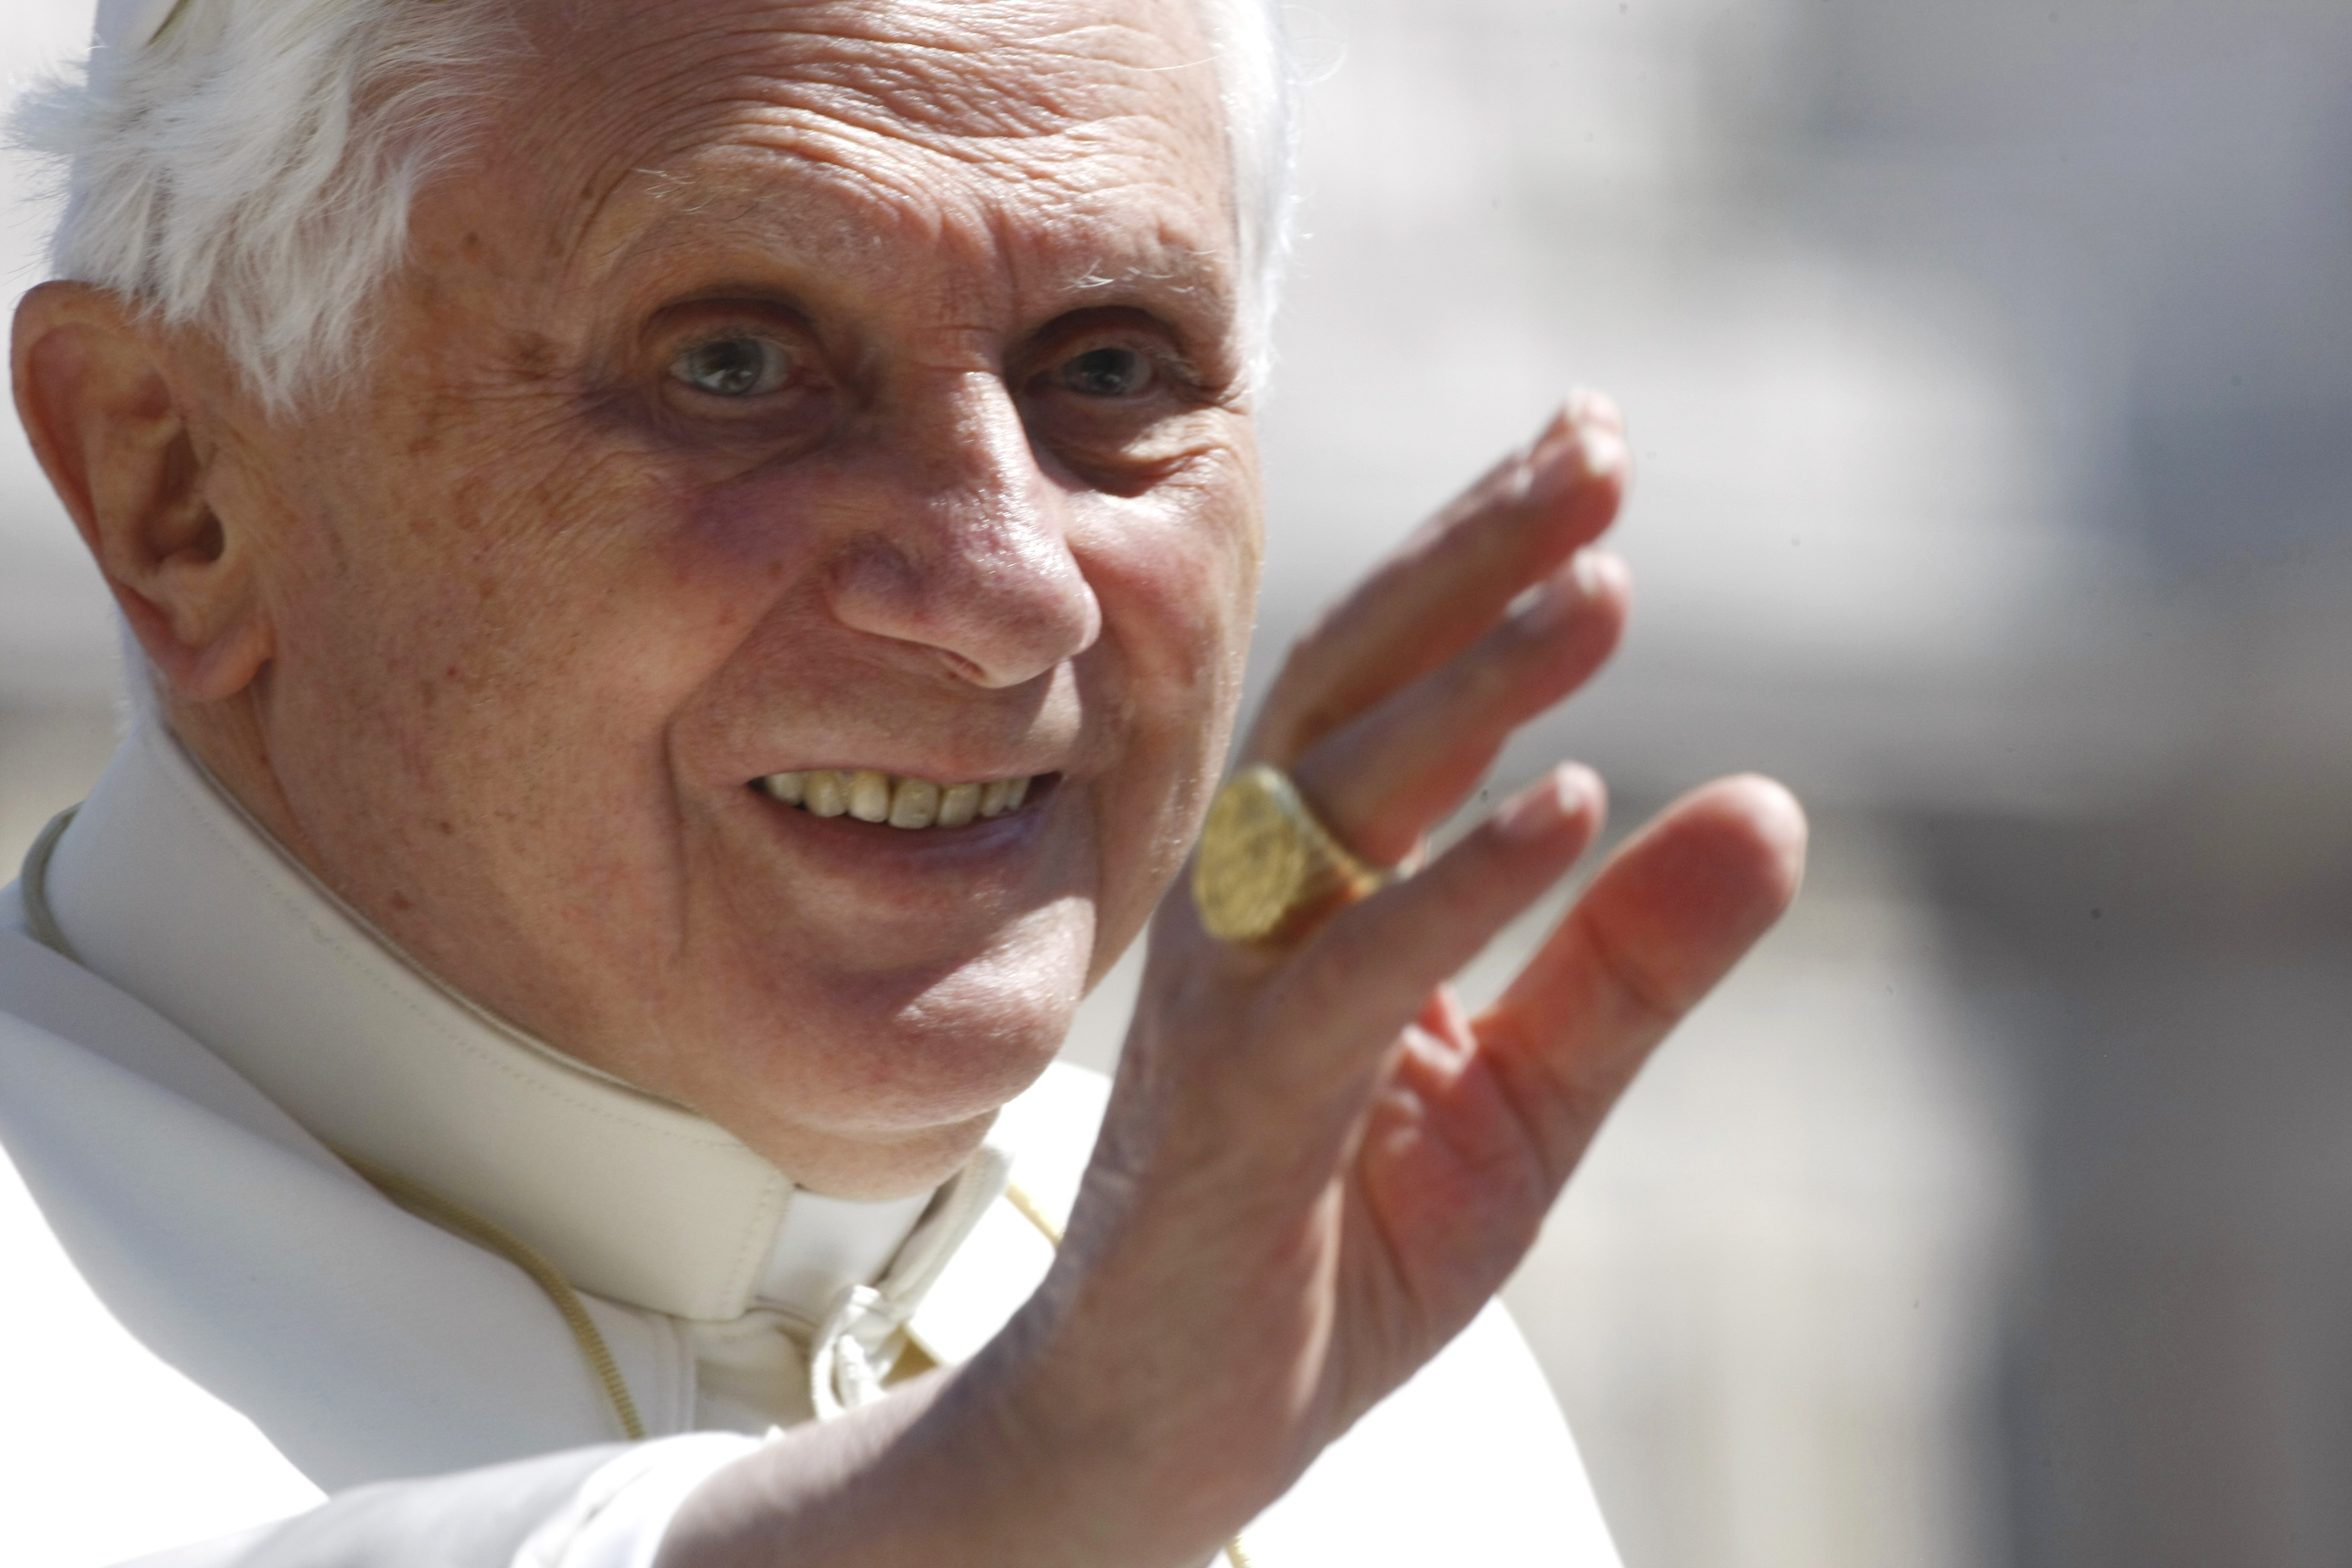 Påven, Pedofili, Religiöst, Brott och straff, Richard Dawkins, Benedictus XVI, Storbritannien